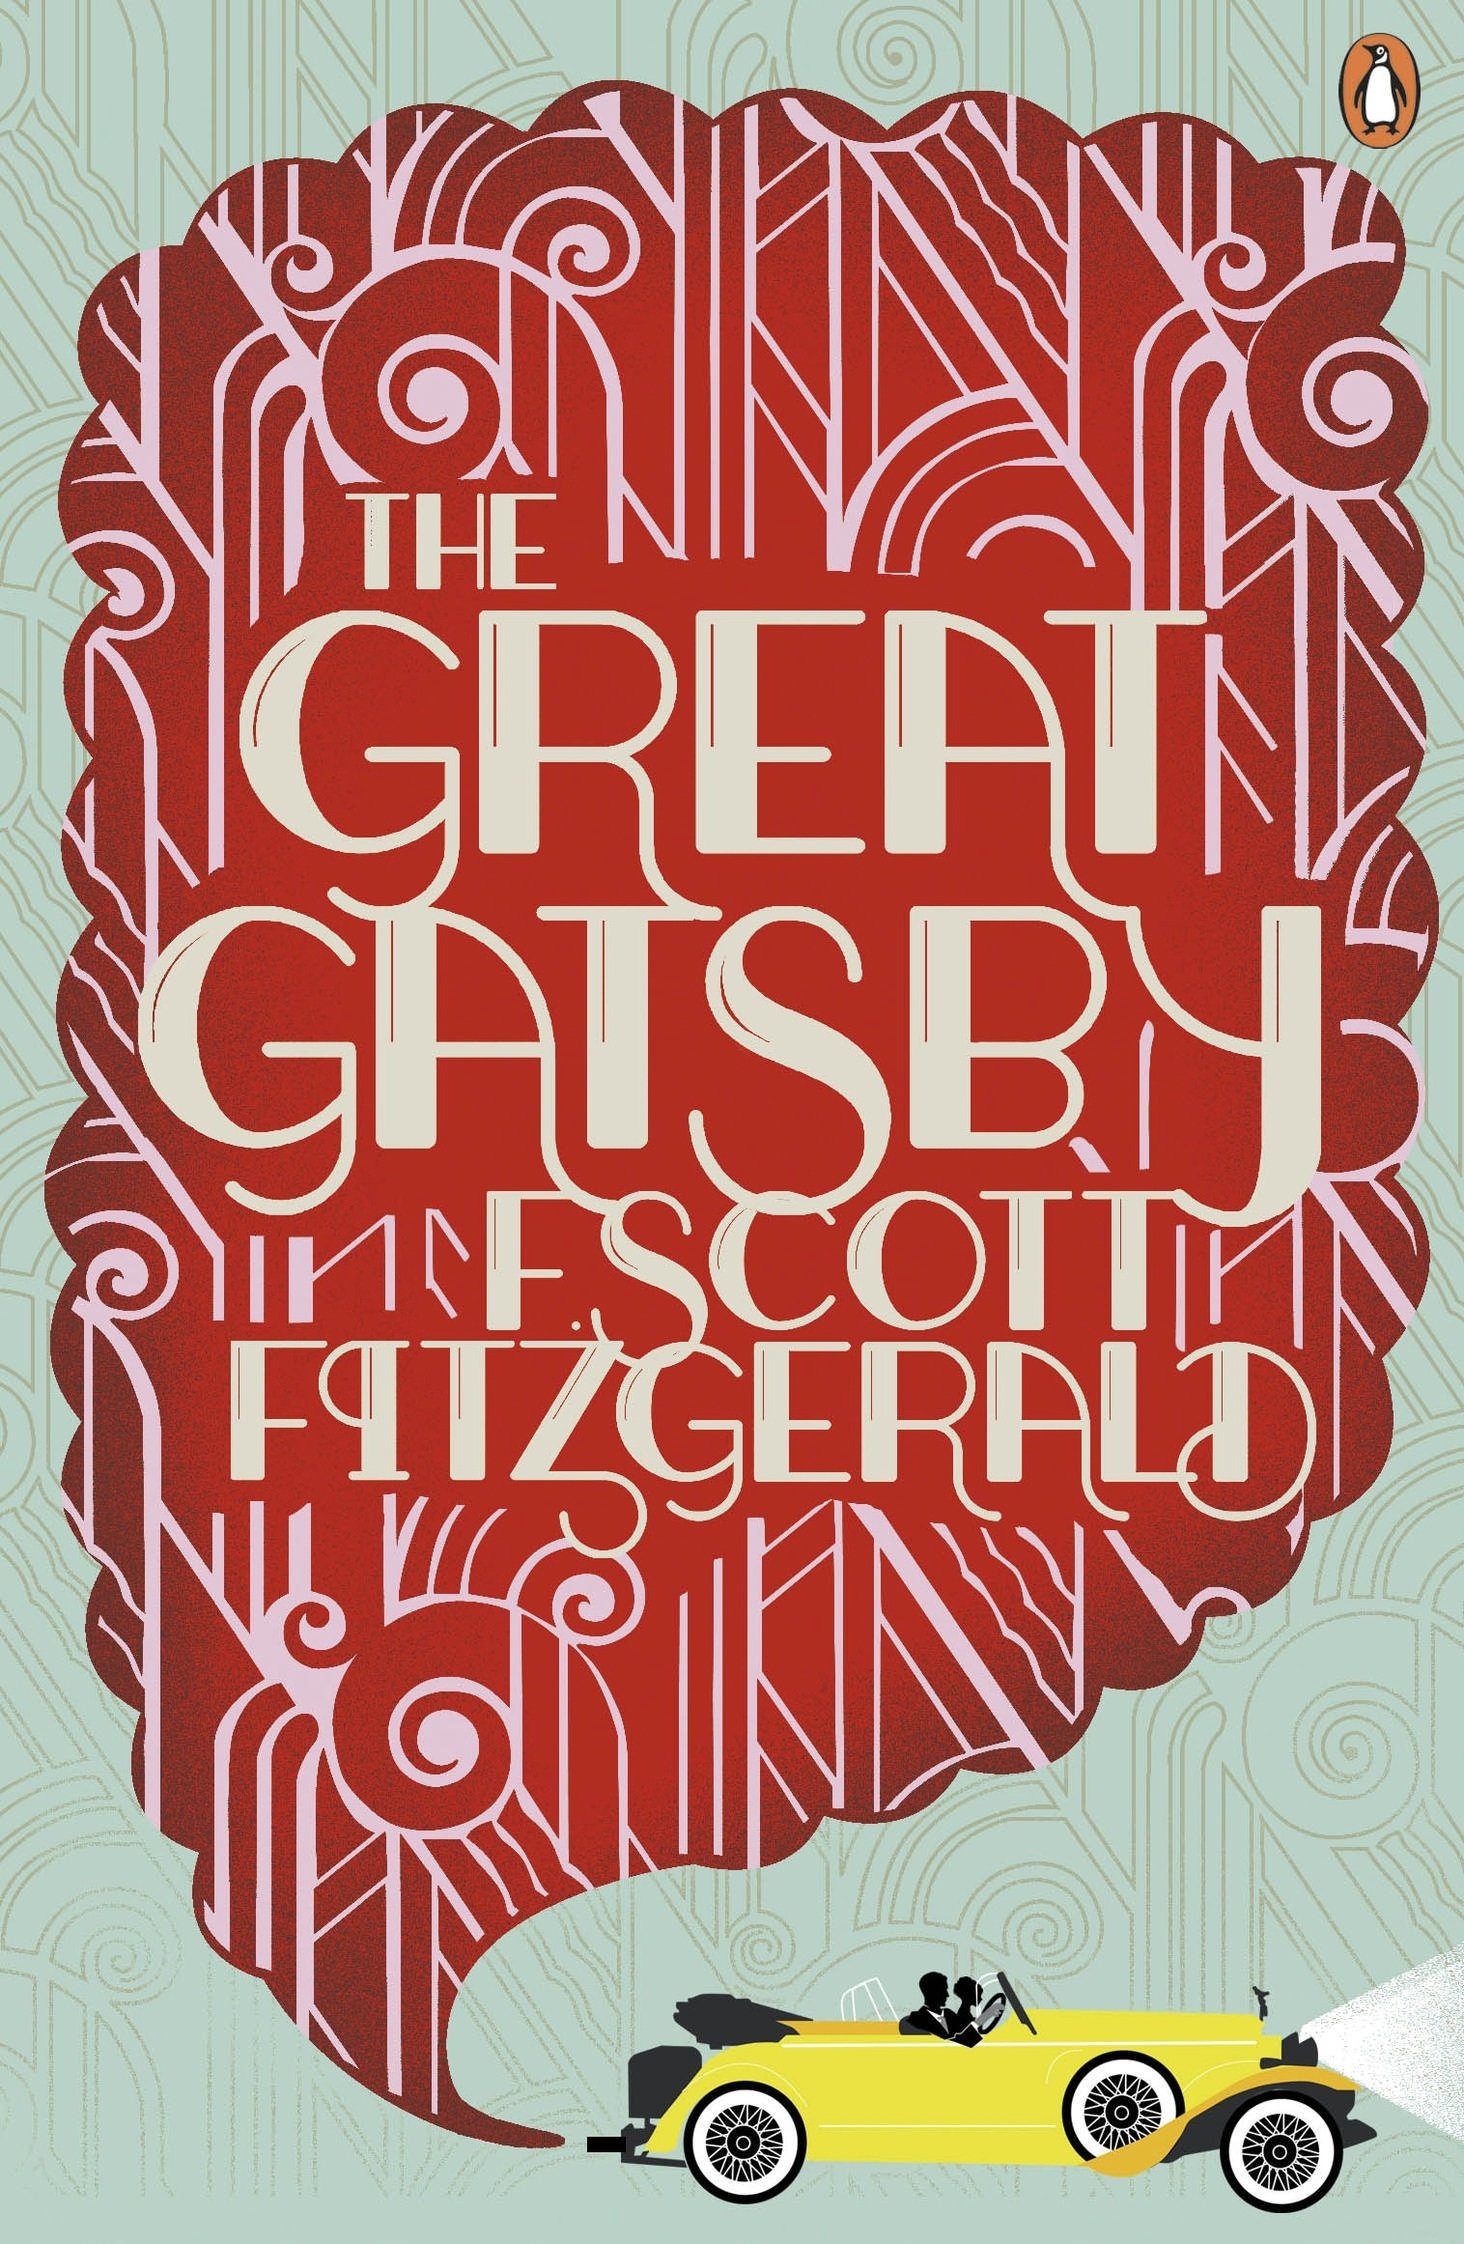 The Great Gatsby, by F. Scott Fitzgerald - interesting book